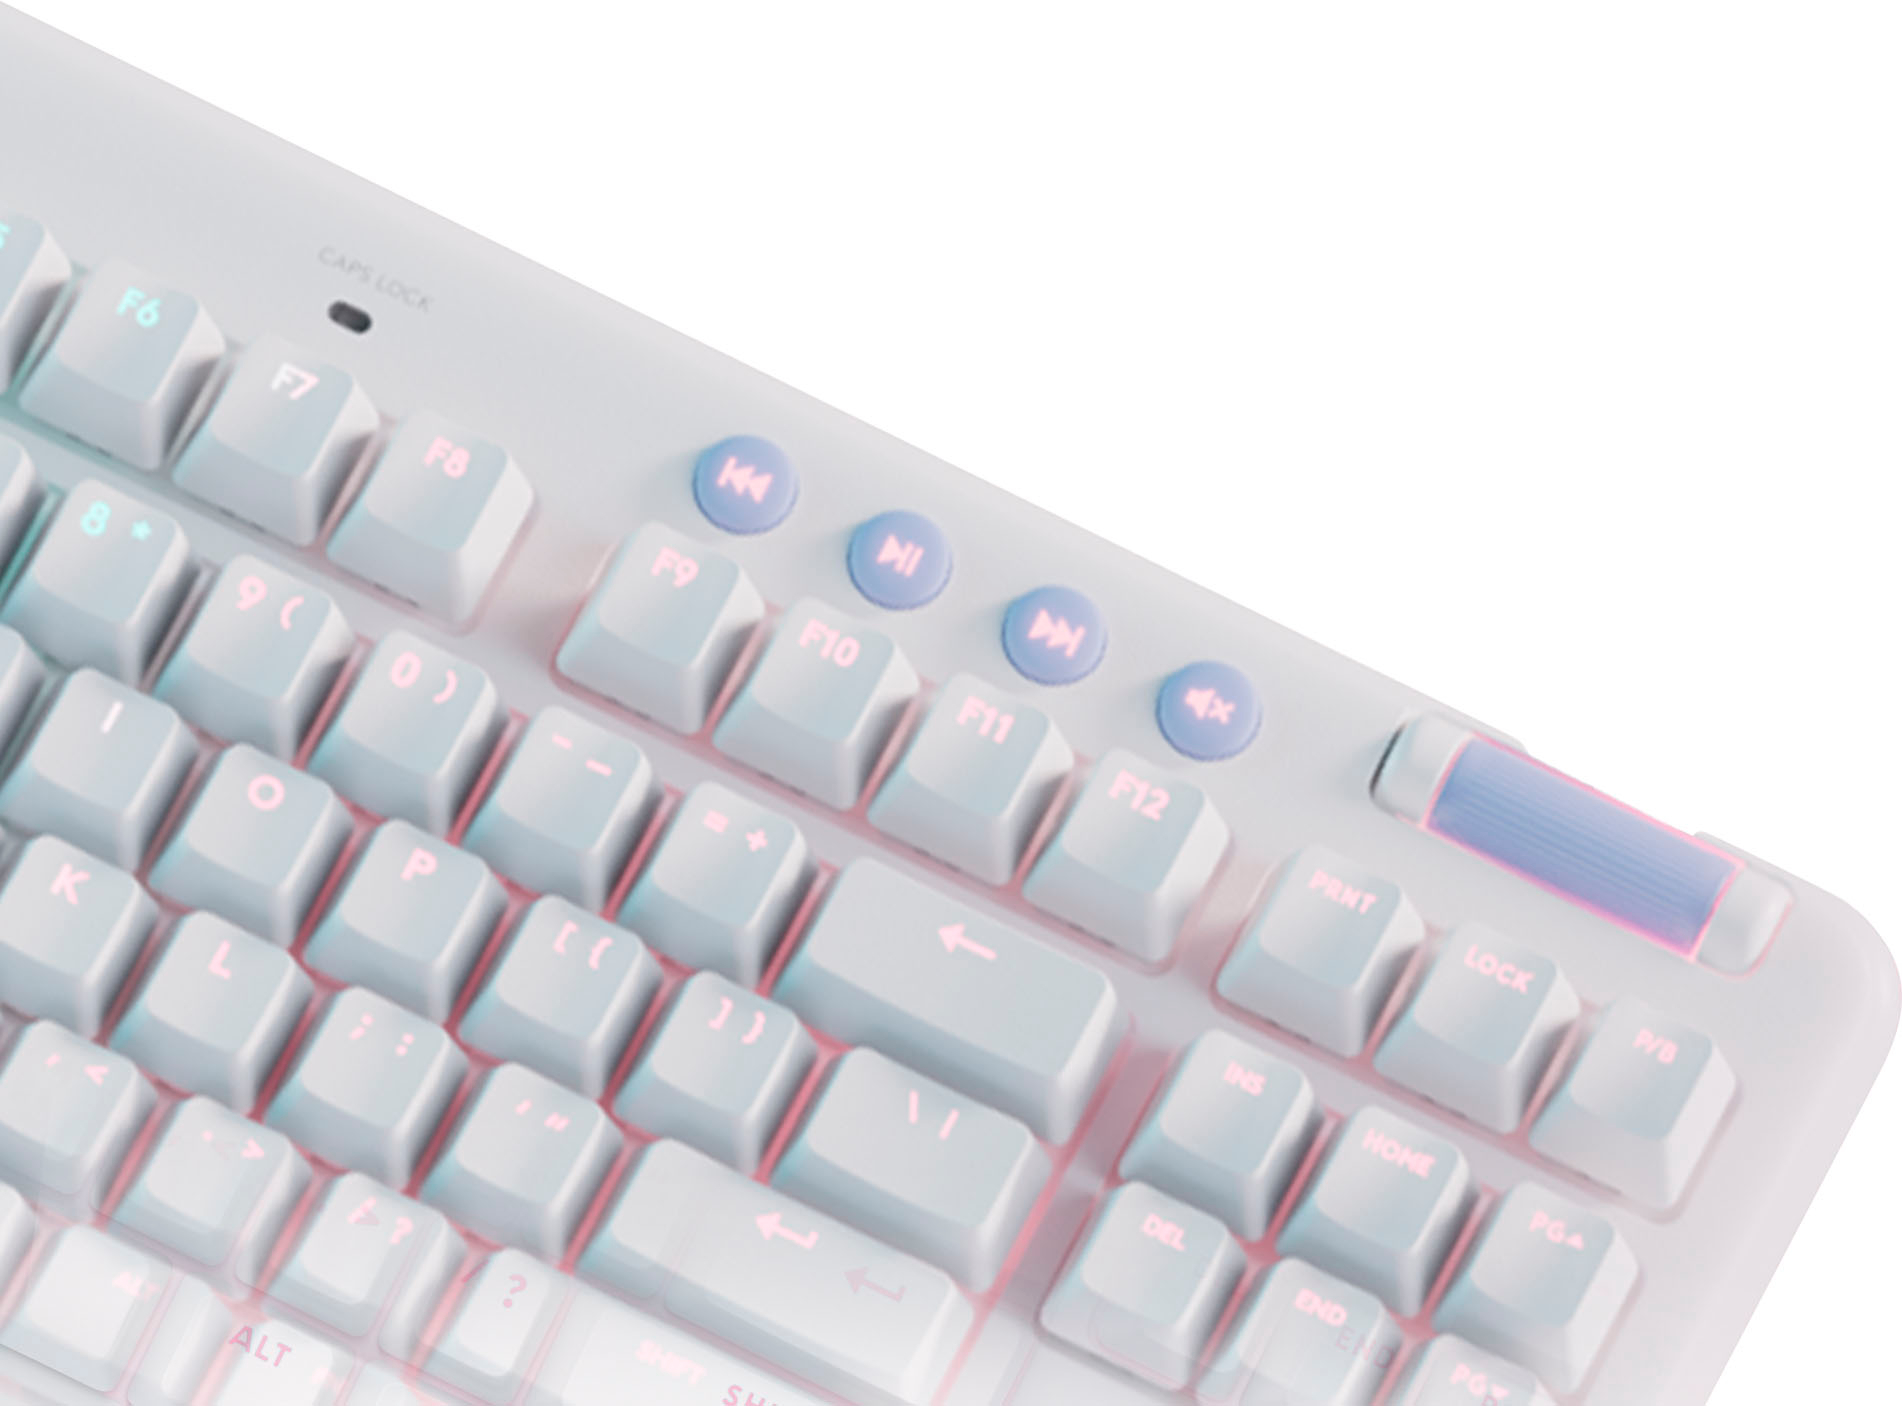 Logitech G715 Wireless Mechanical Gaming Keyboard with LIGHTSYNC RGB  Lighting, L